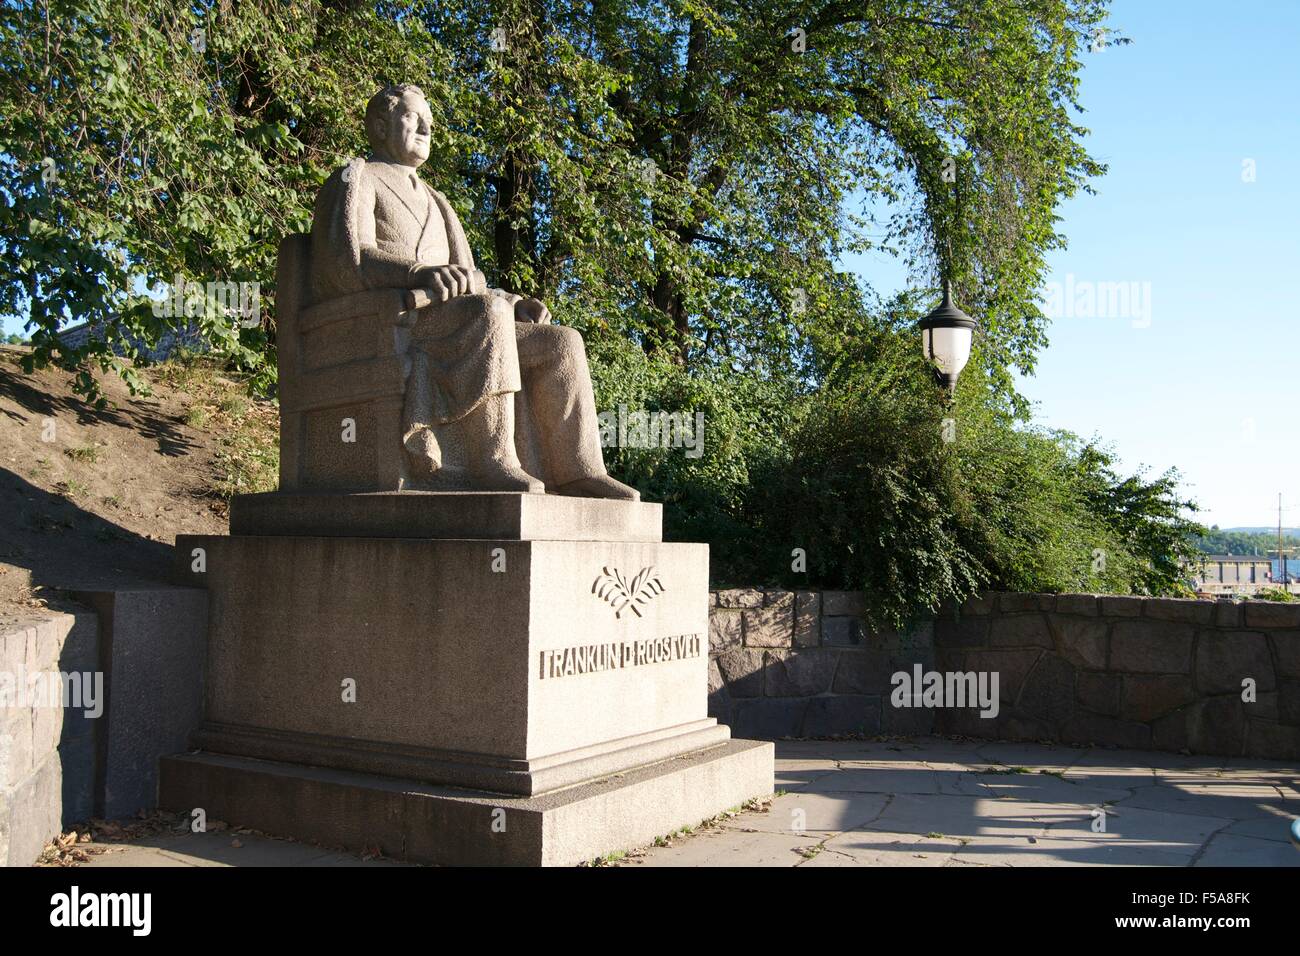 Franklin Roosevelt statue monument Oslo stone art Stock Photo